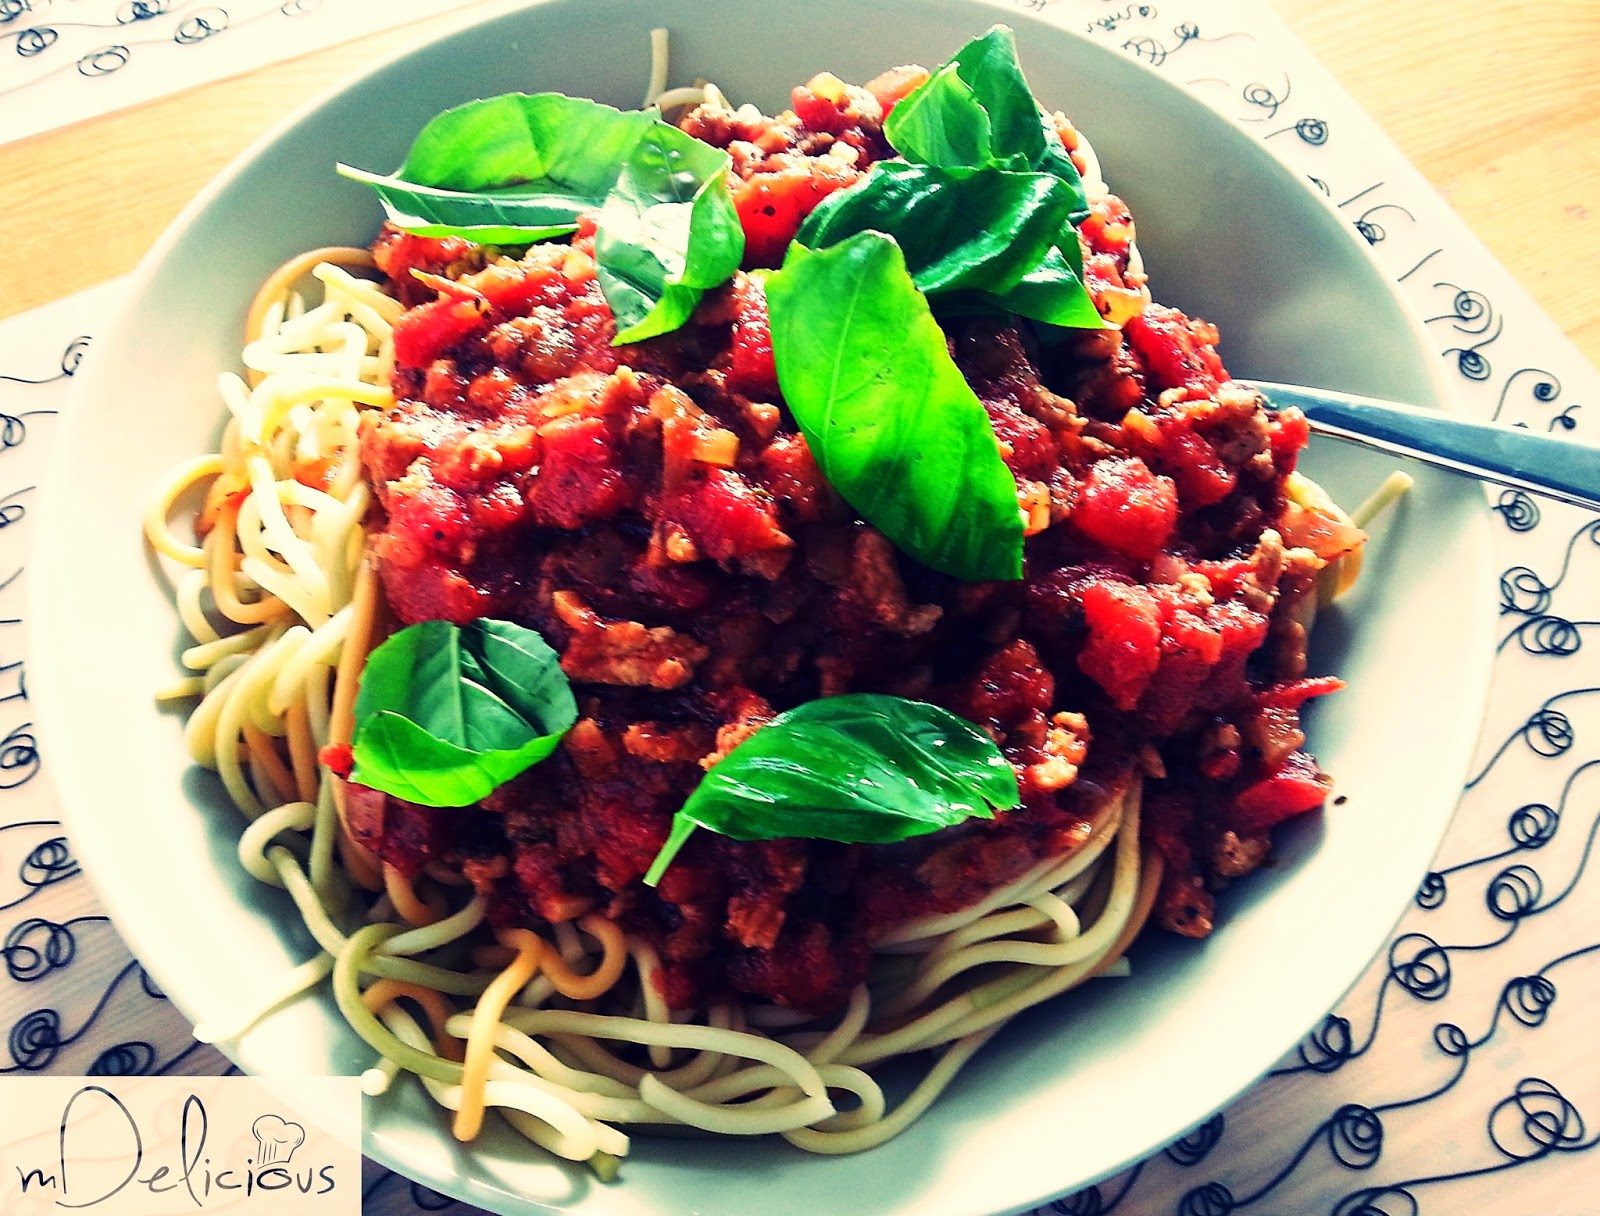 Mdelicious: Spaghetti bolognese